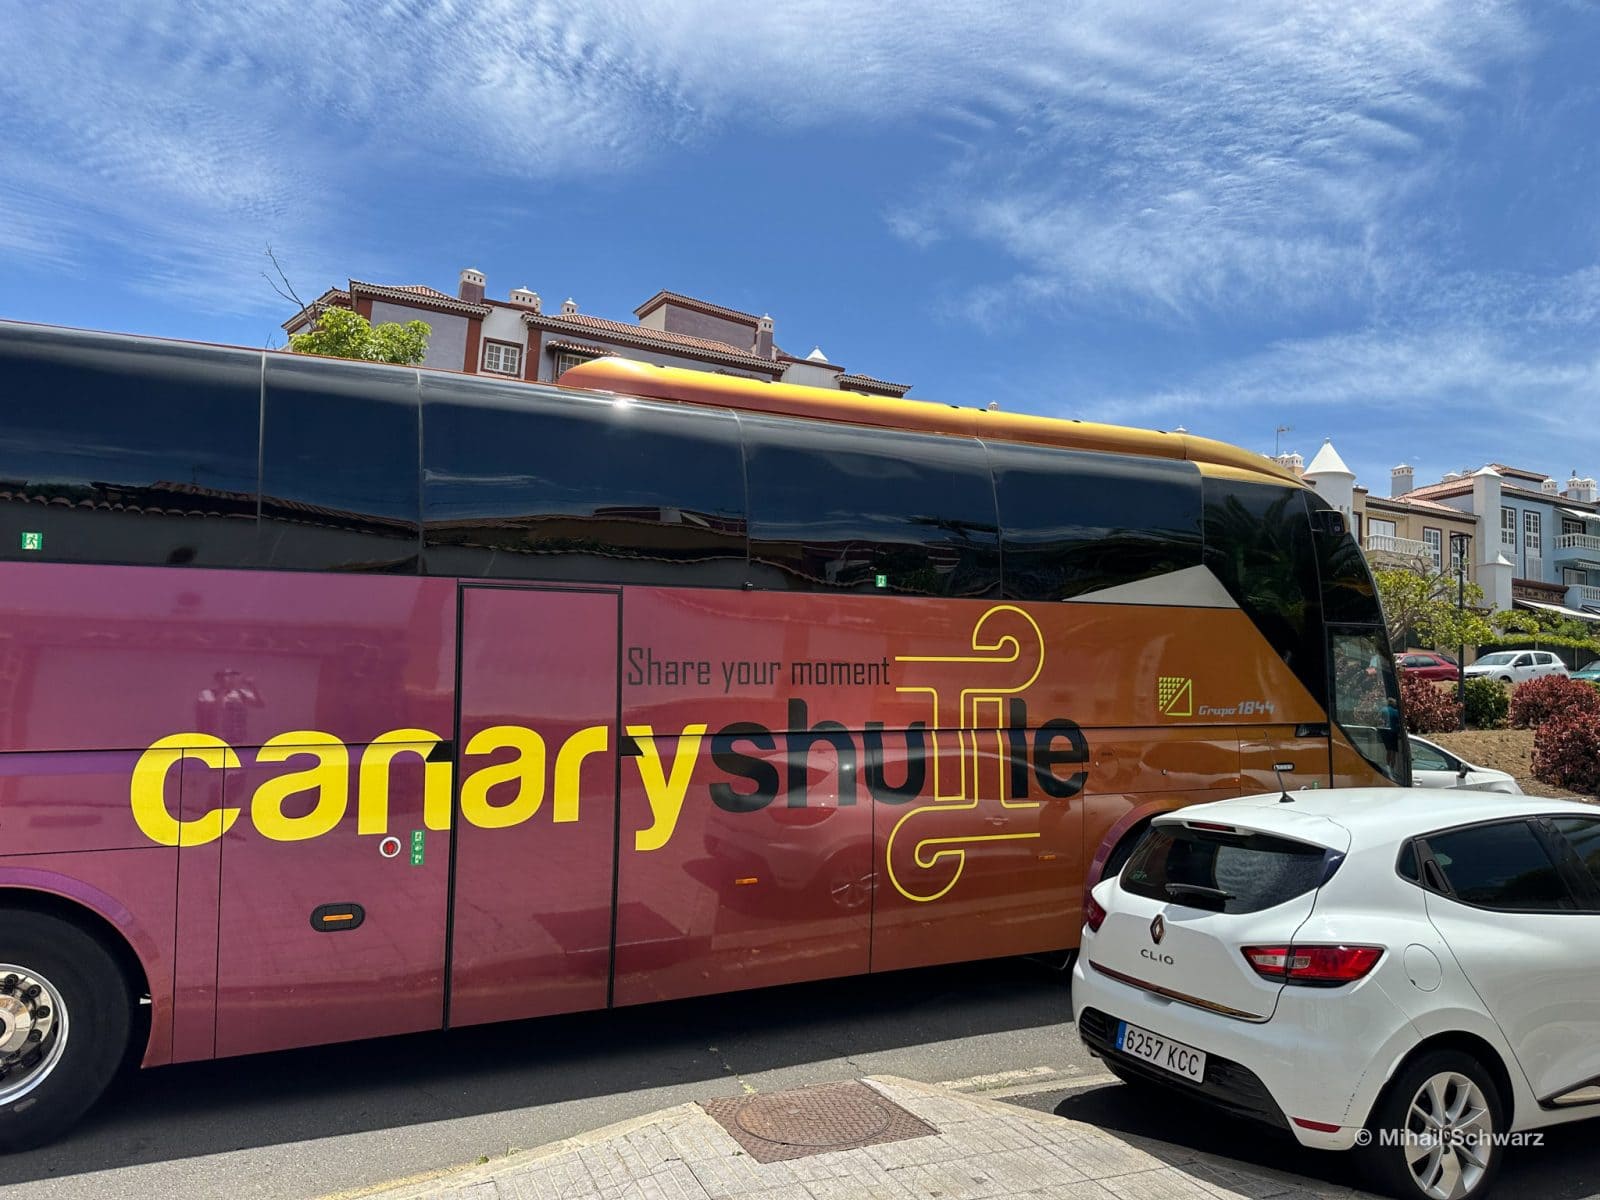 Canary Shuttle